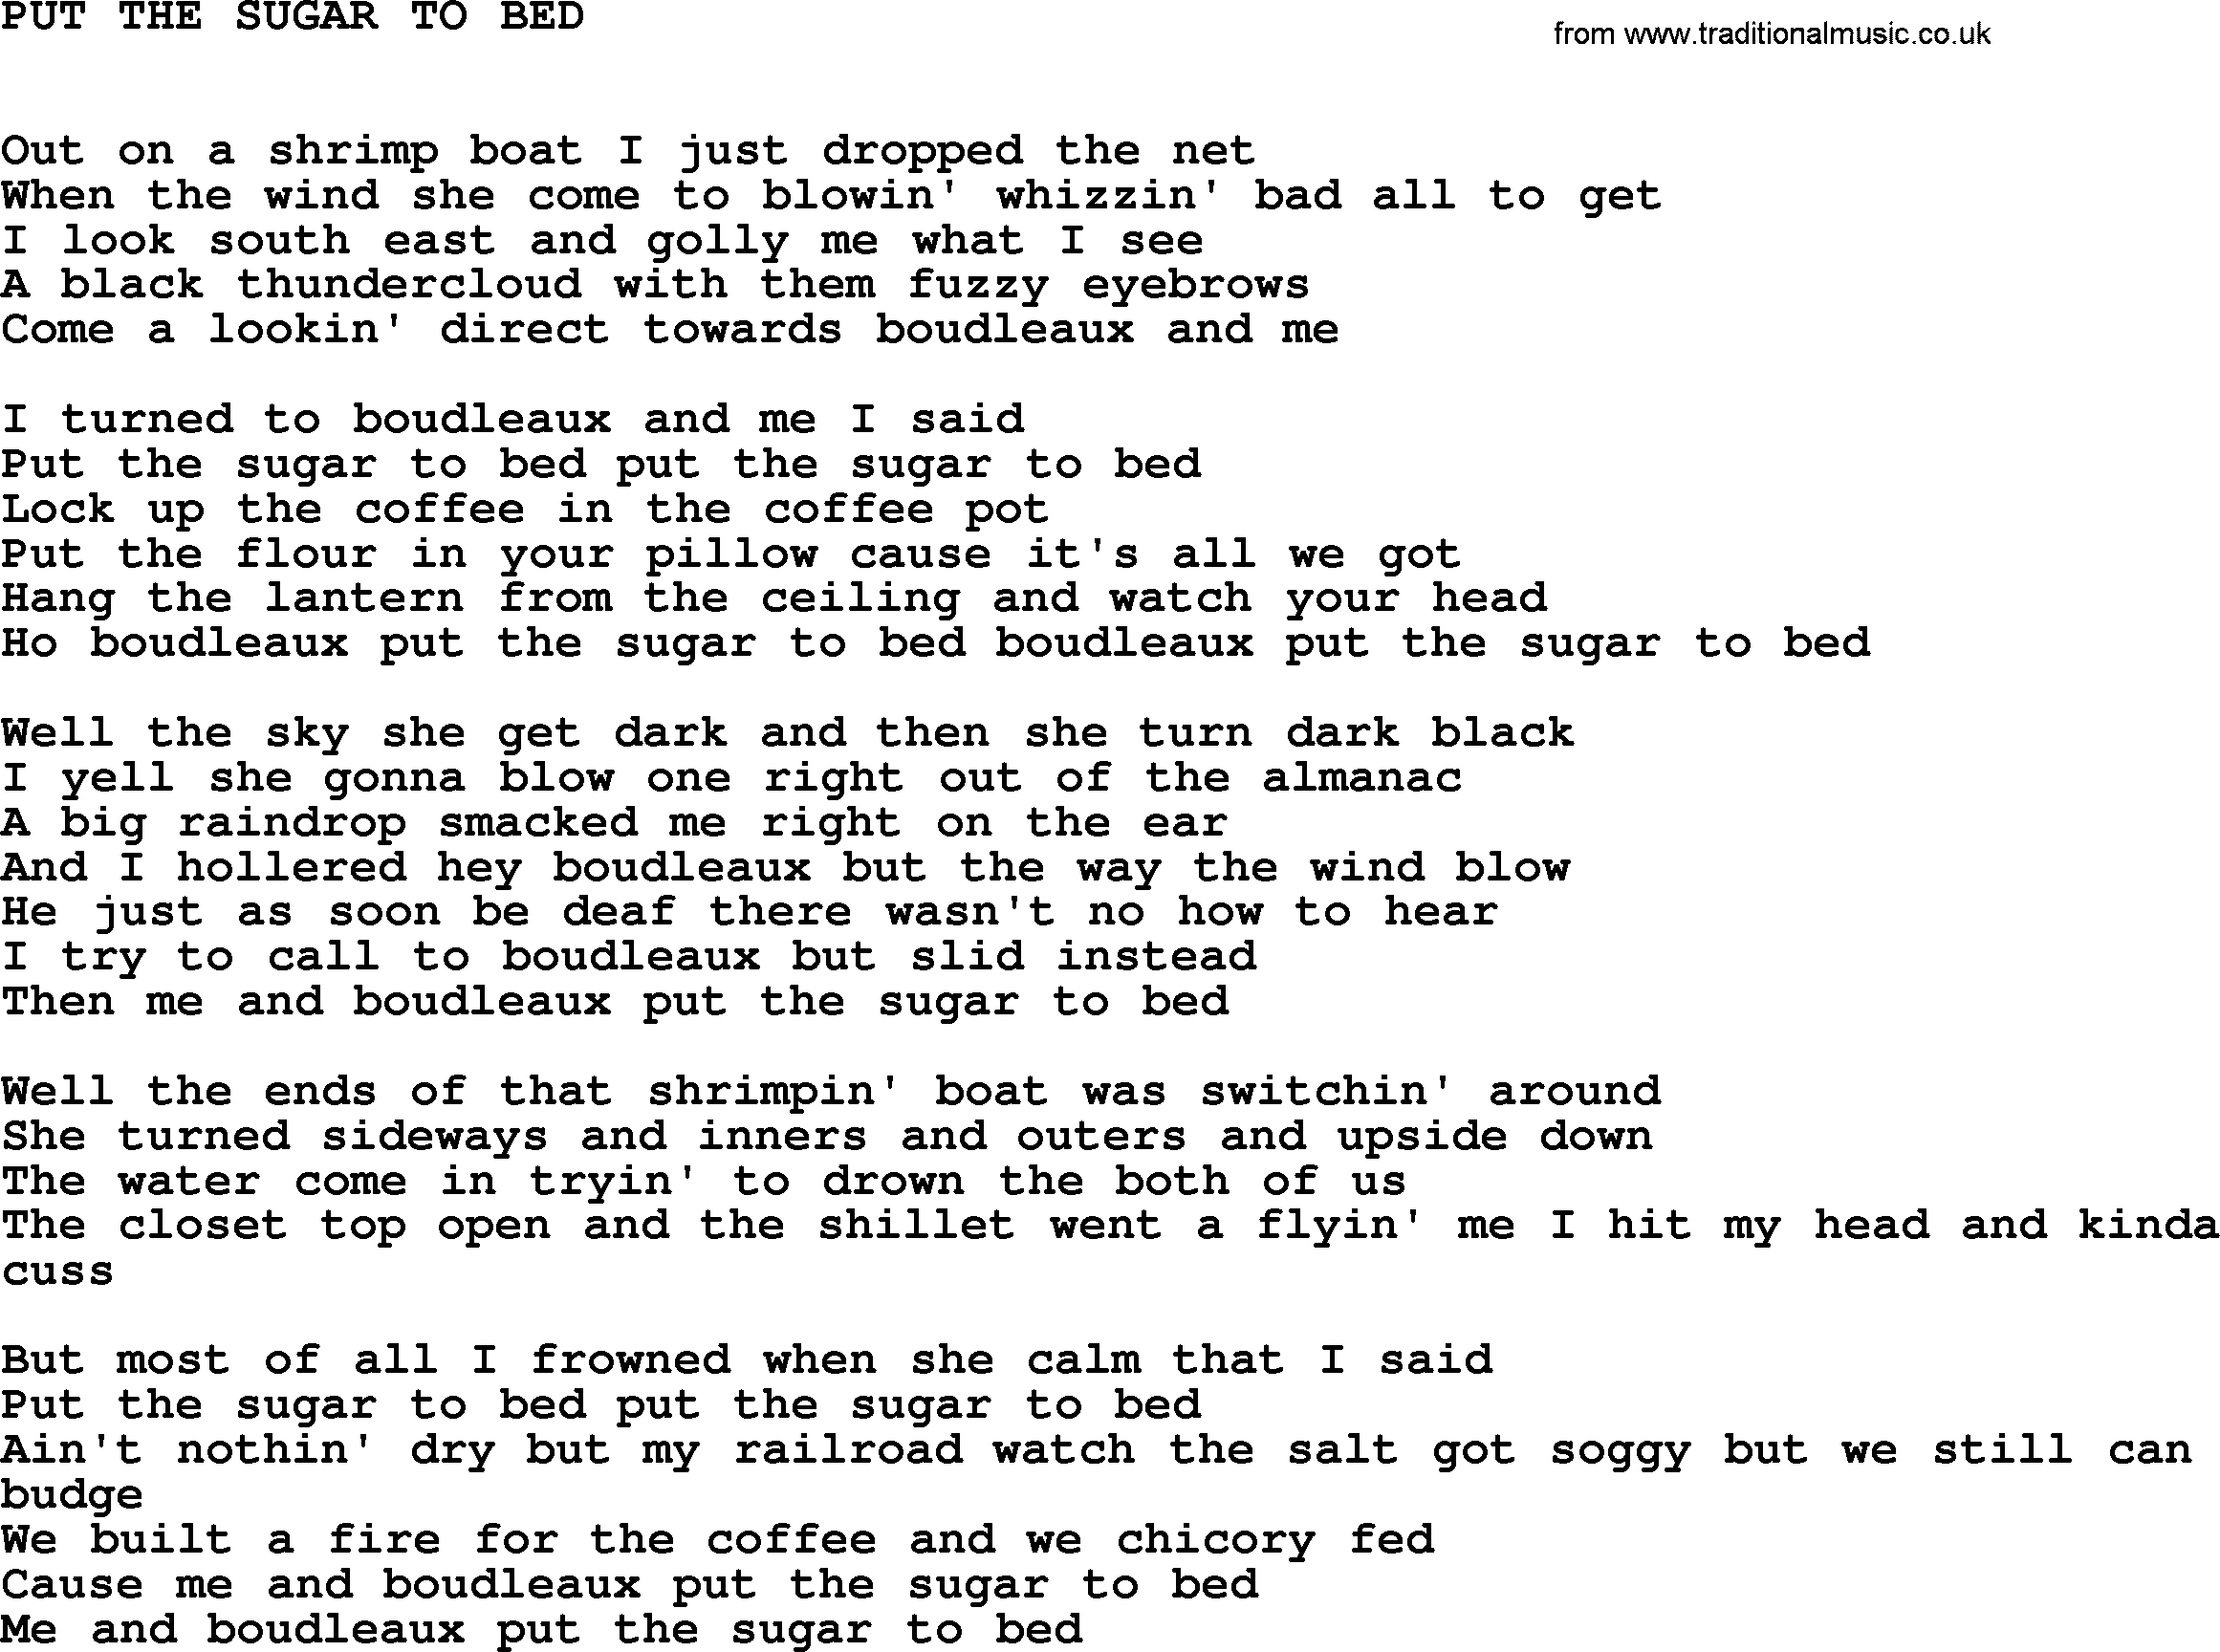 Johnny Cash song Put The Sugar To Bed.txt lyrics